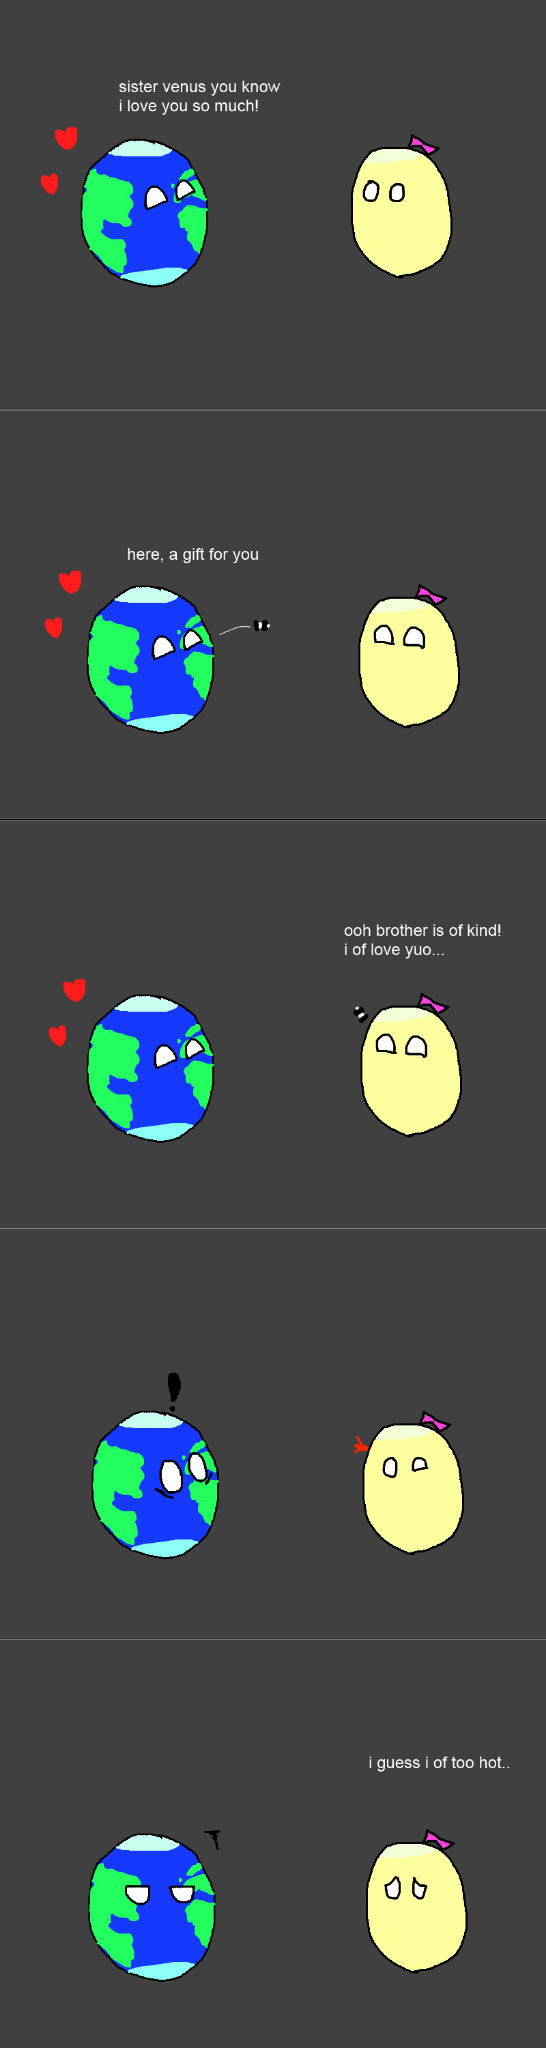 Venus and Earth - meme